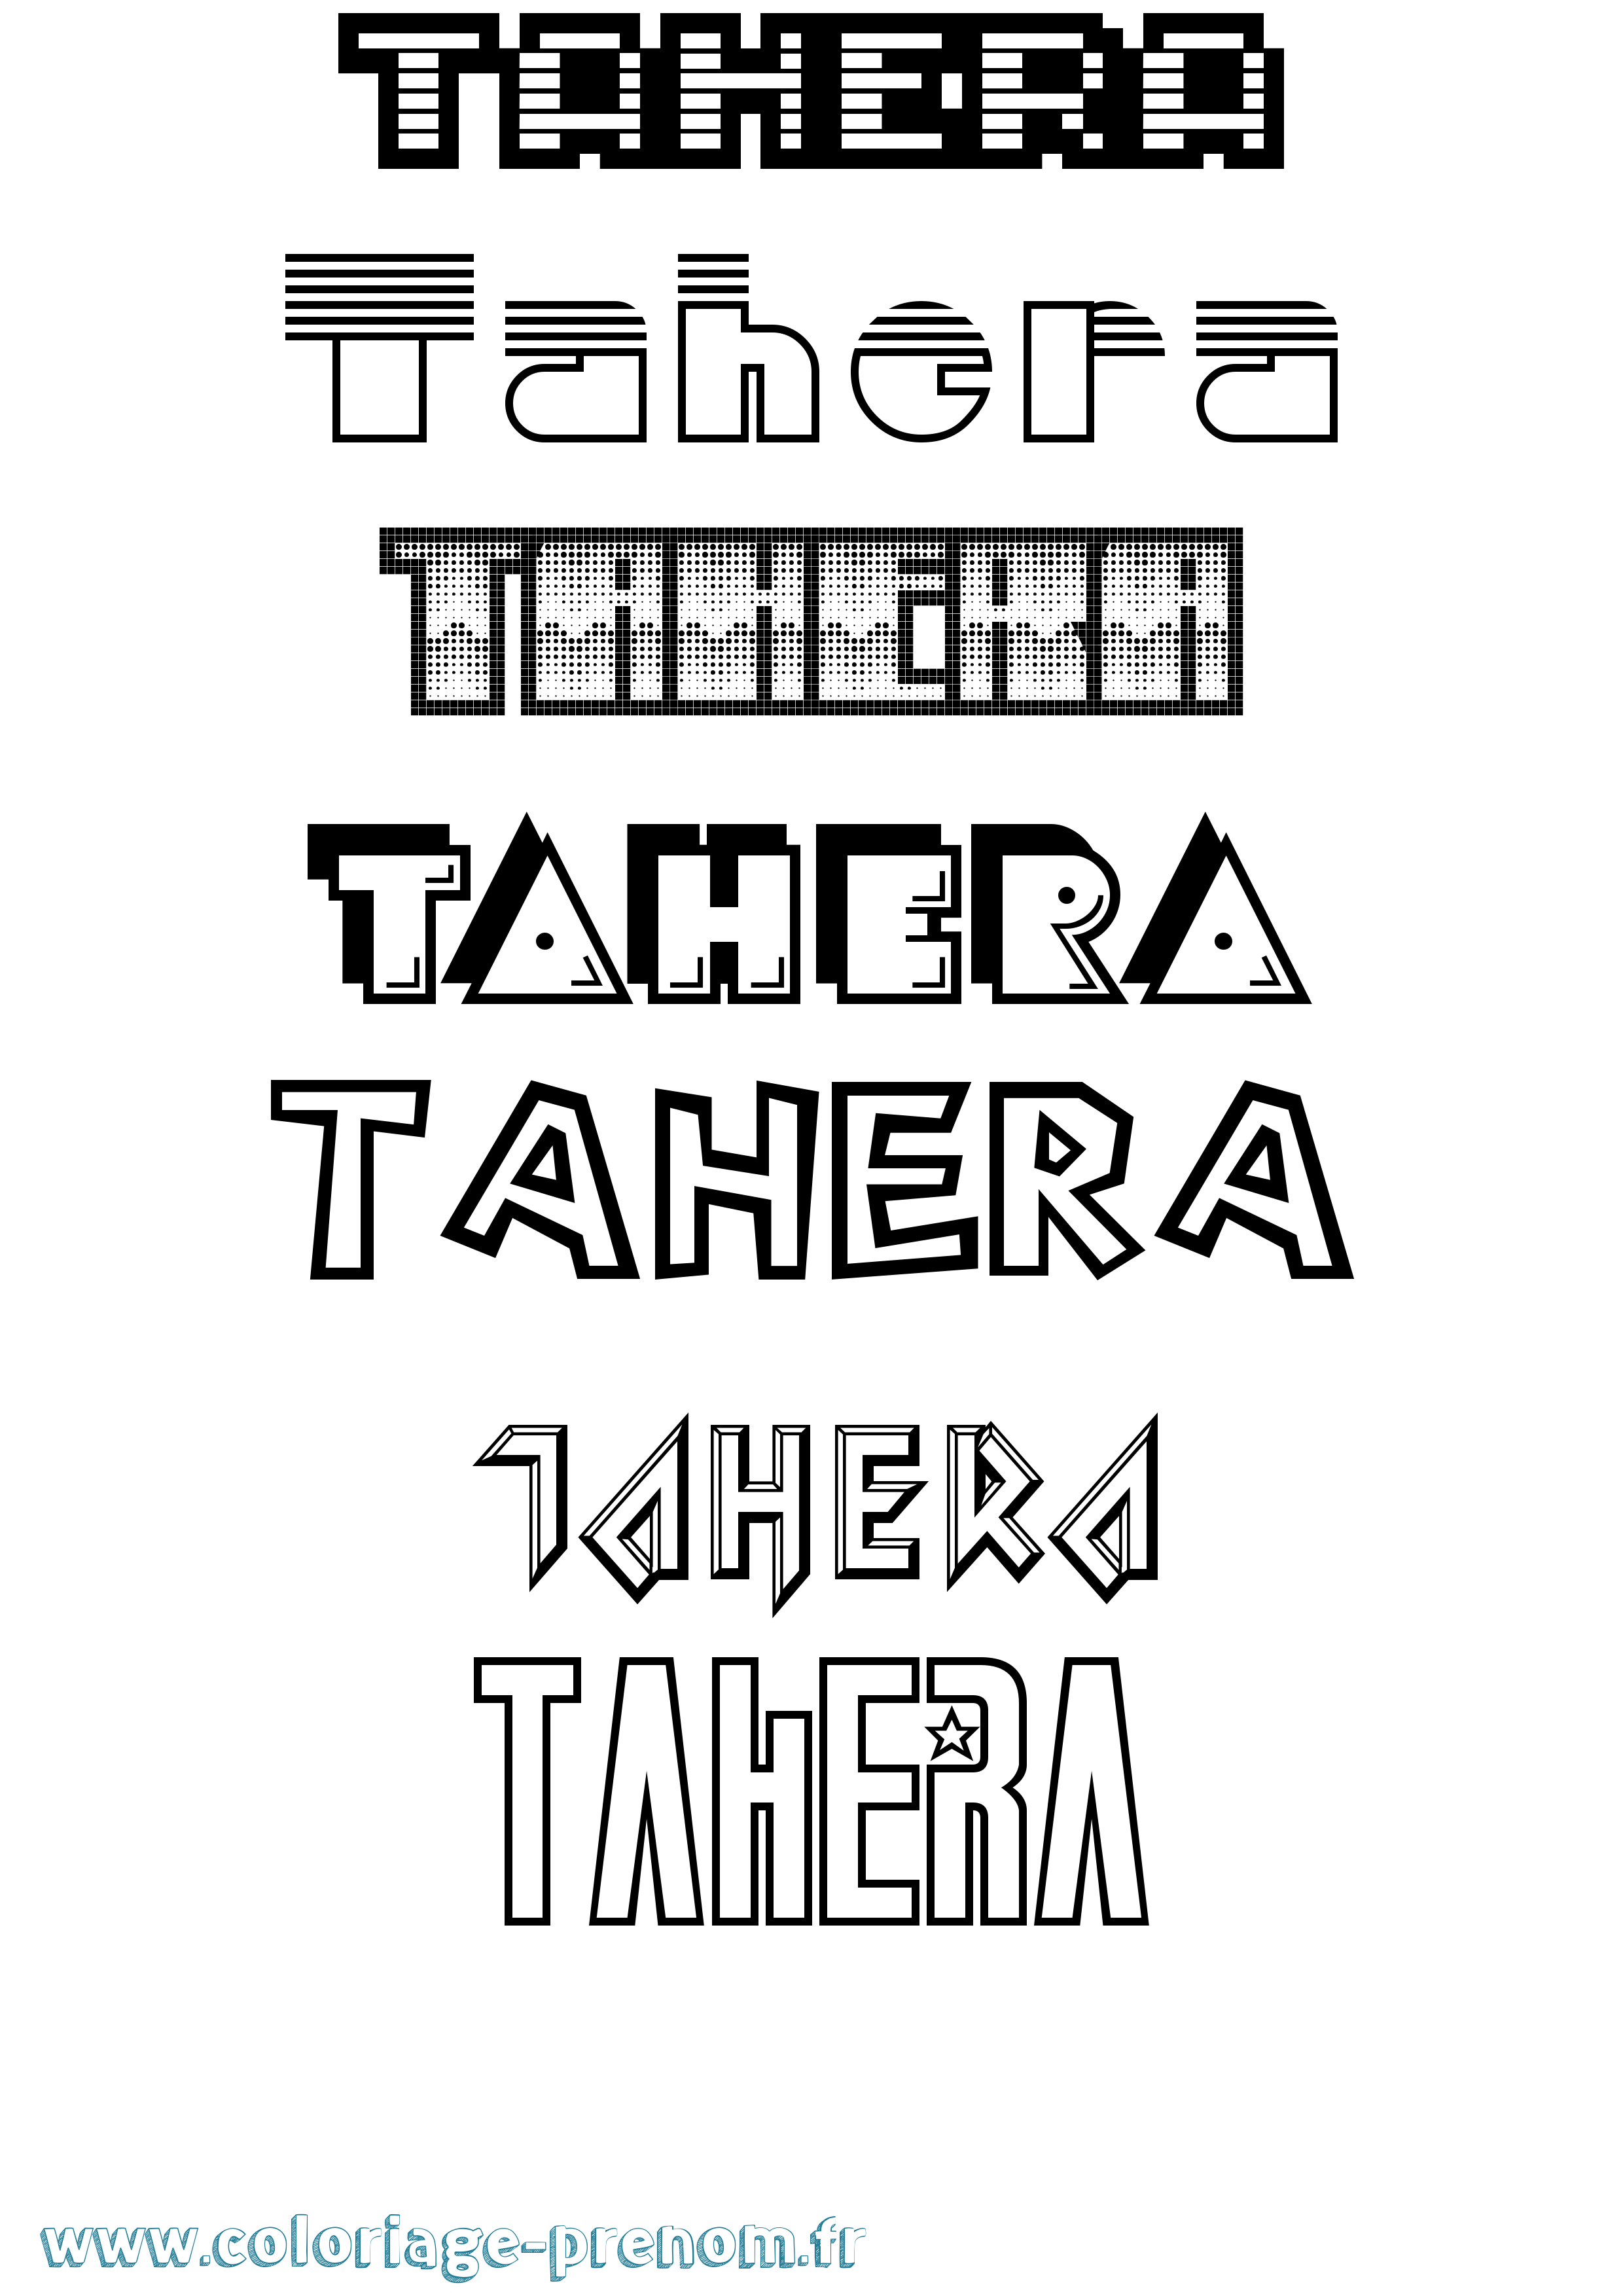 Coloriage prénom Tahera Jeux Vidéos